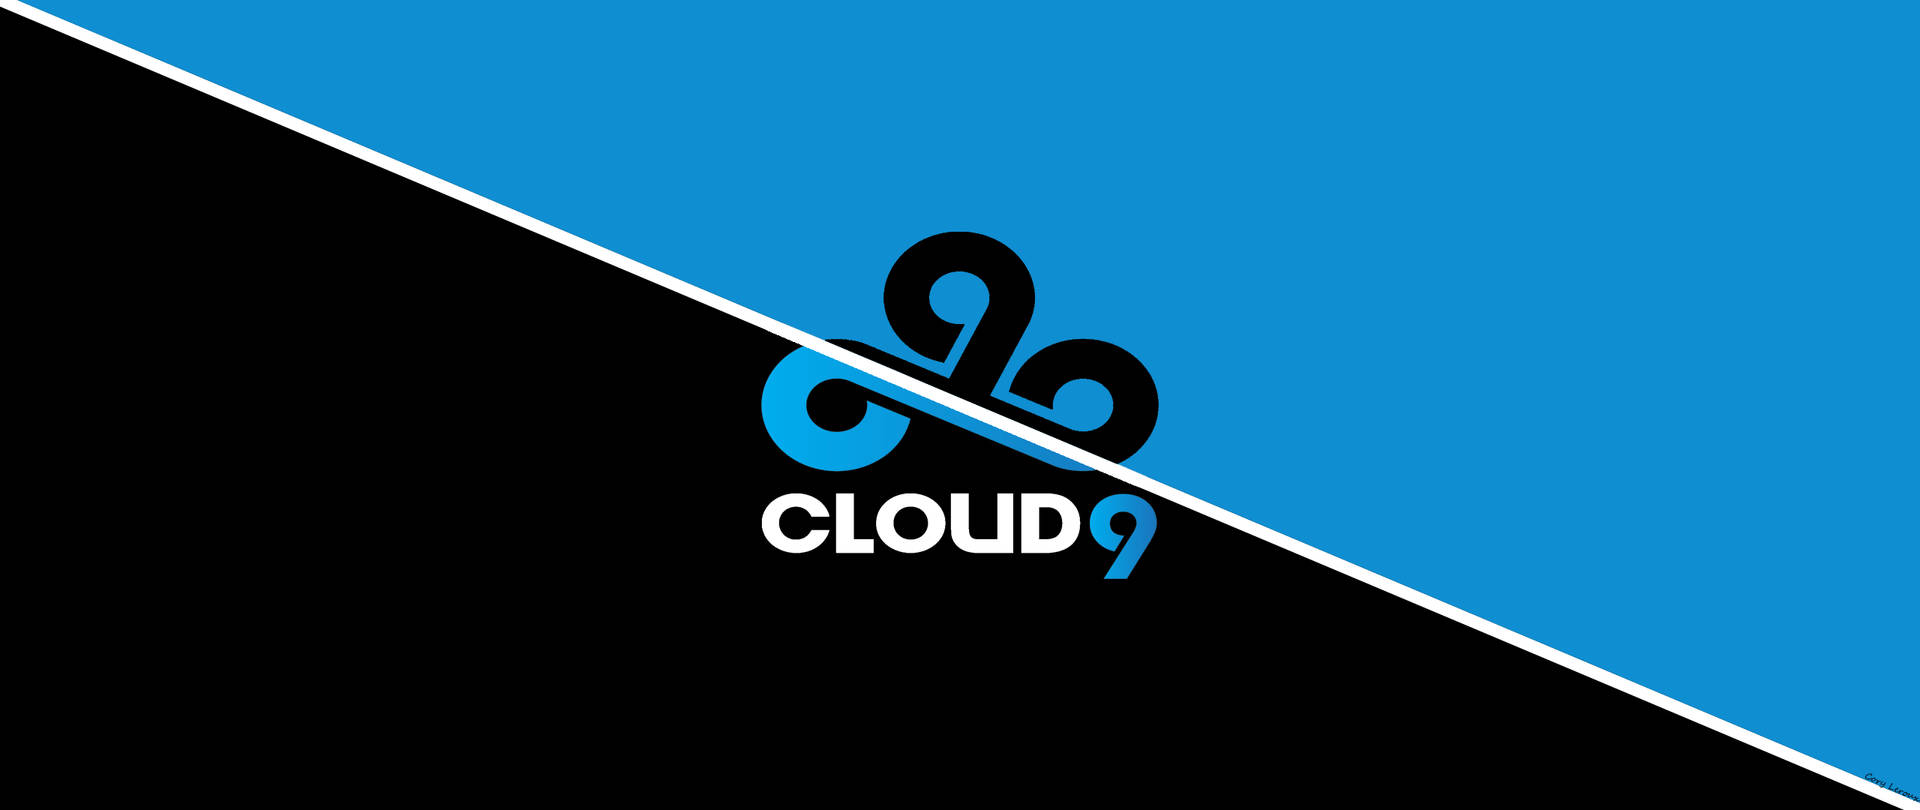 Horizontally Cut Cloud9 Logo Wallpaper